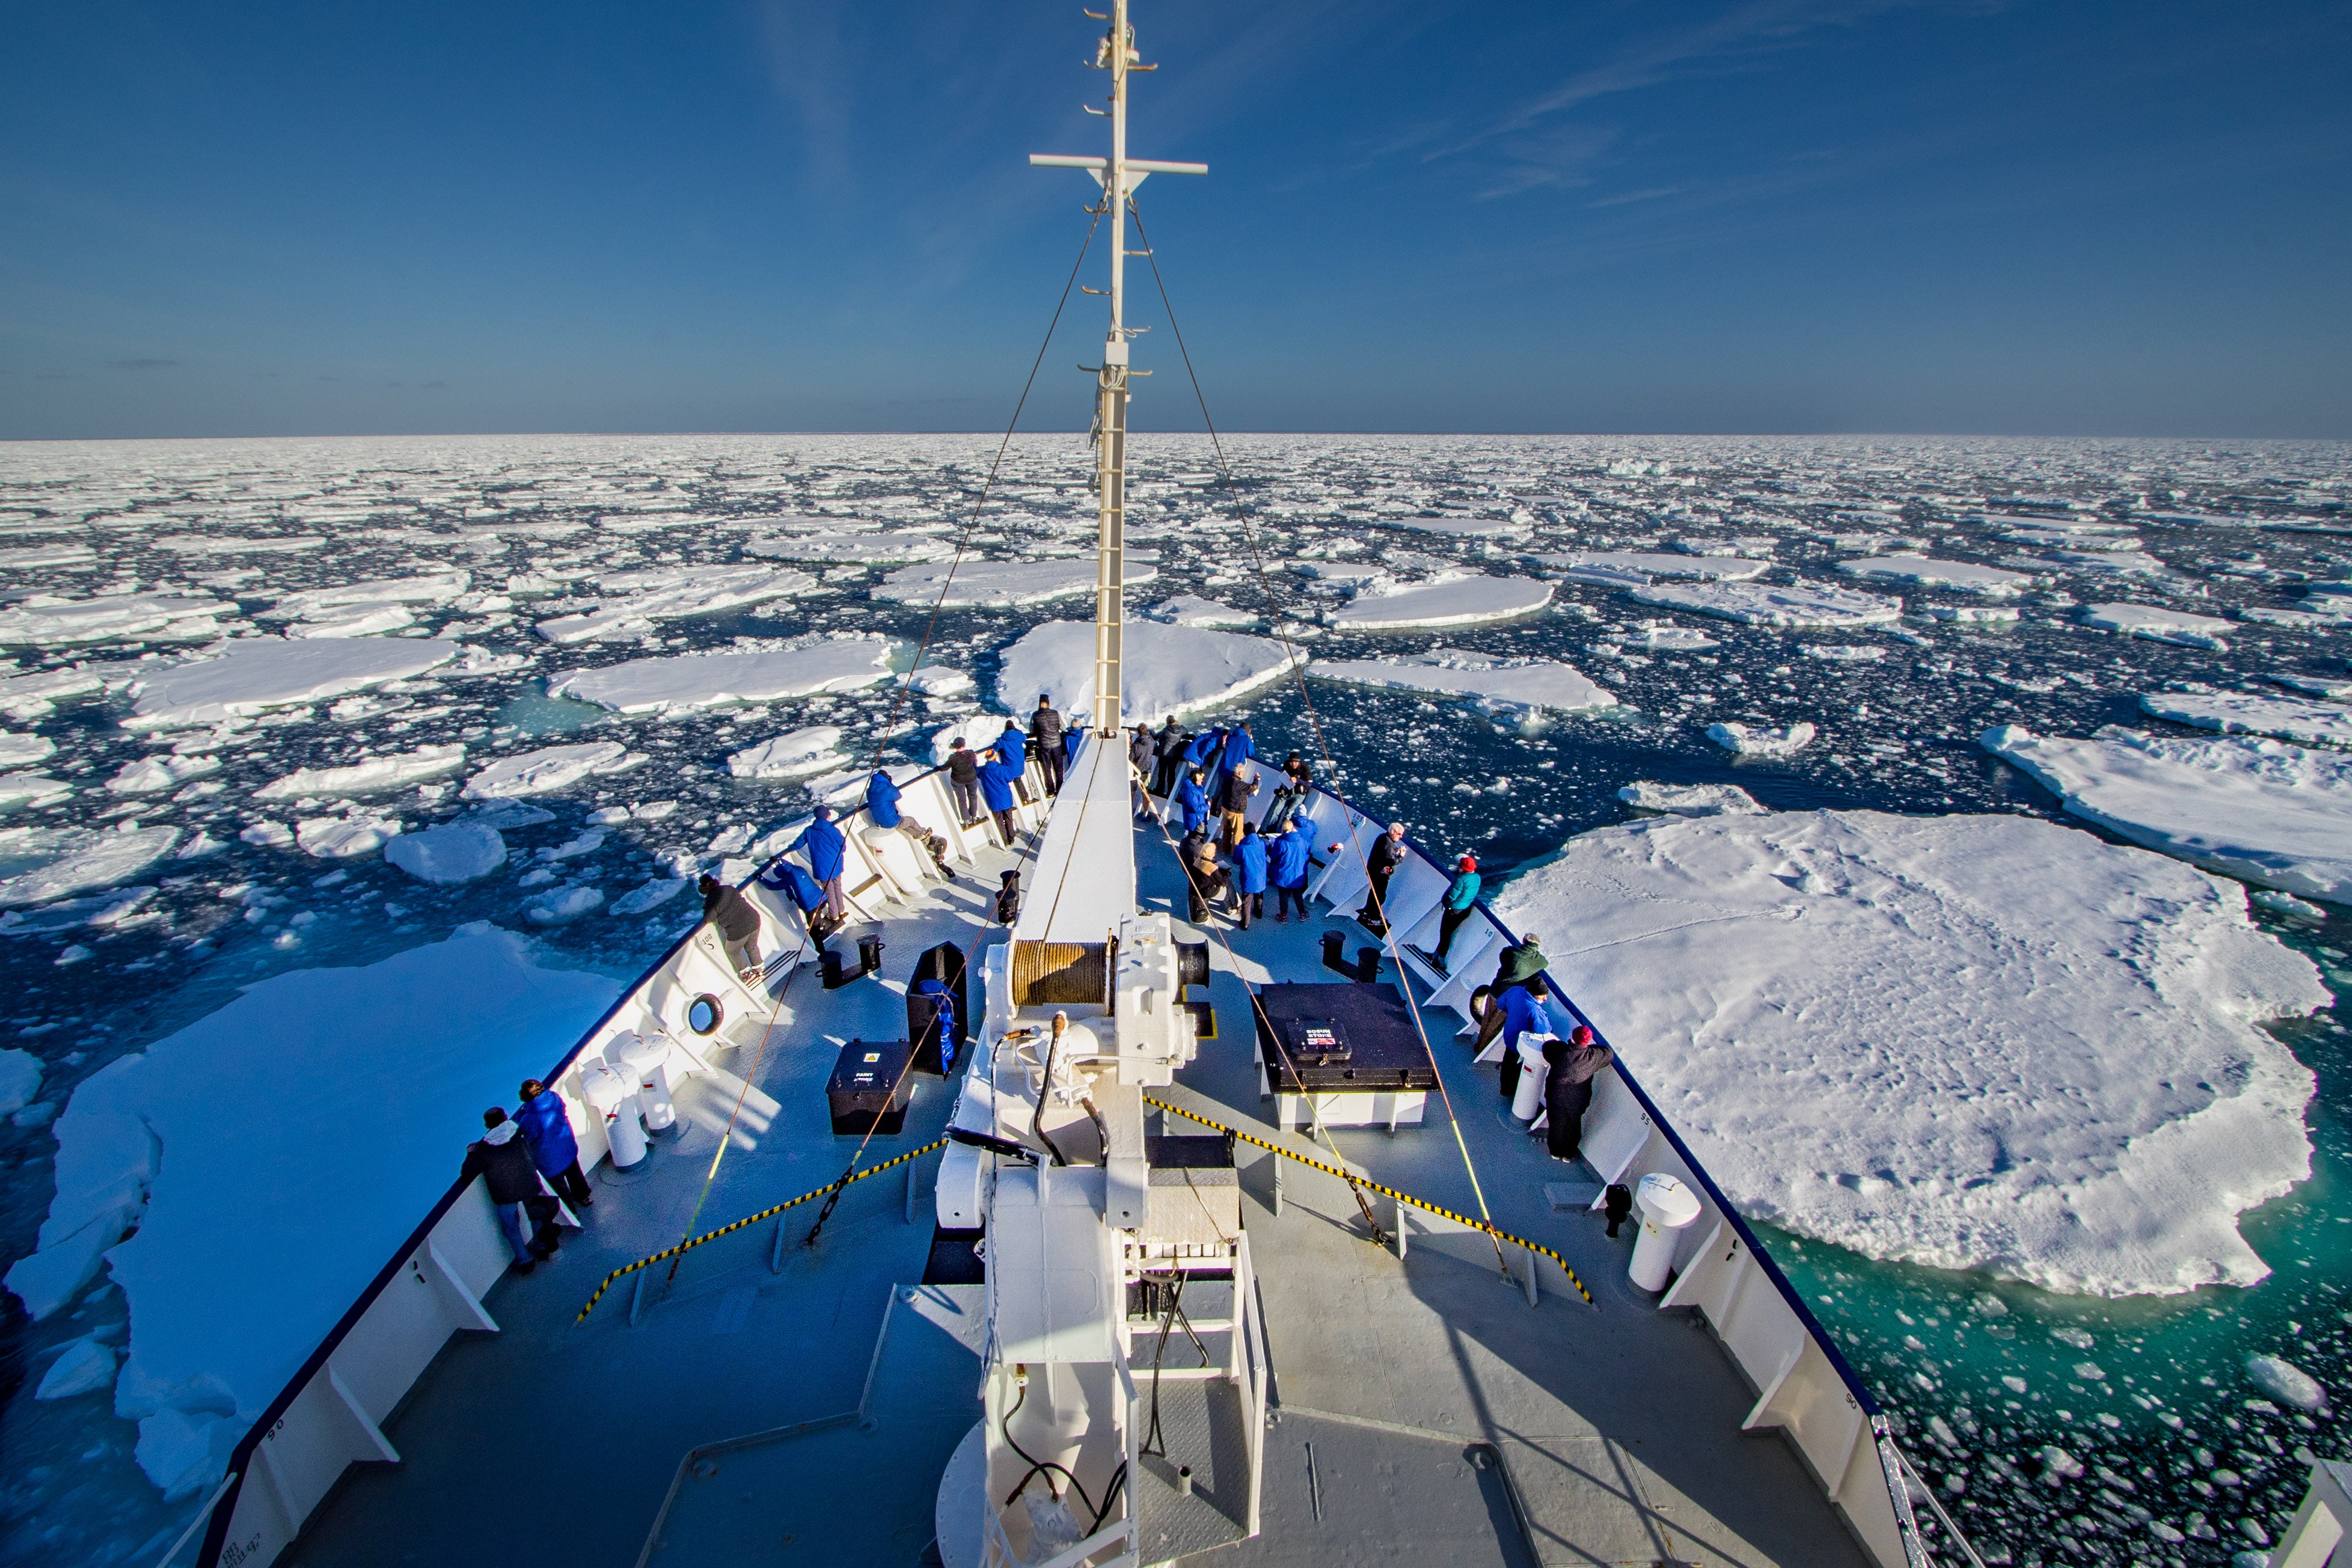 Antarctica 2017 Ross Sea Eastern Antarctica By Sherry Ott 04392 1 